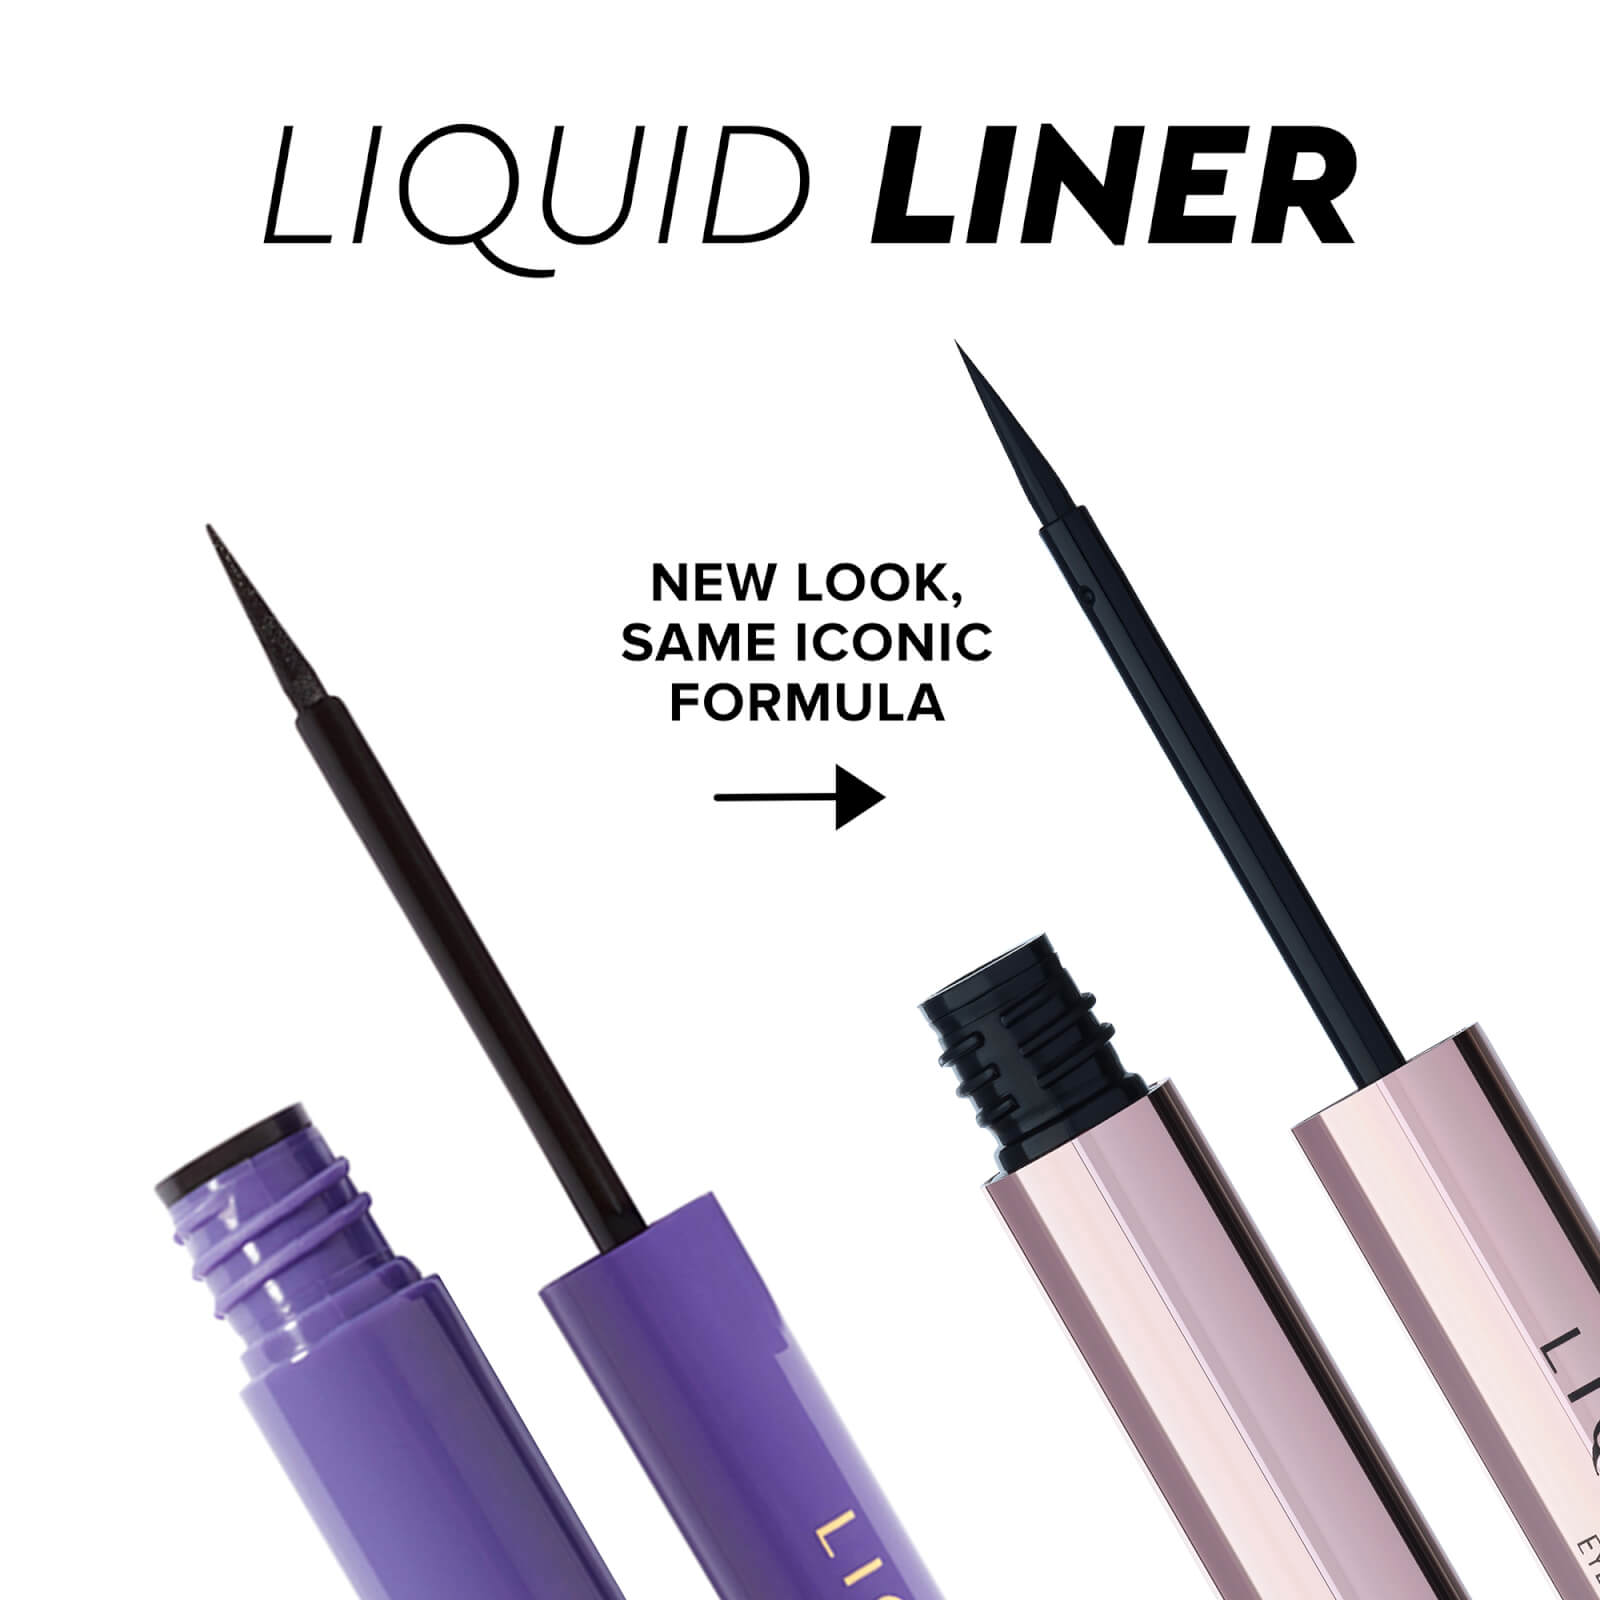 Liquid Liner. New Look, Same iconic formula